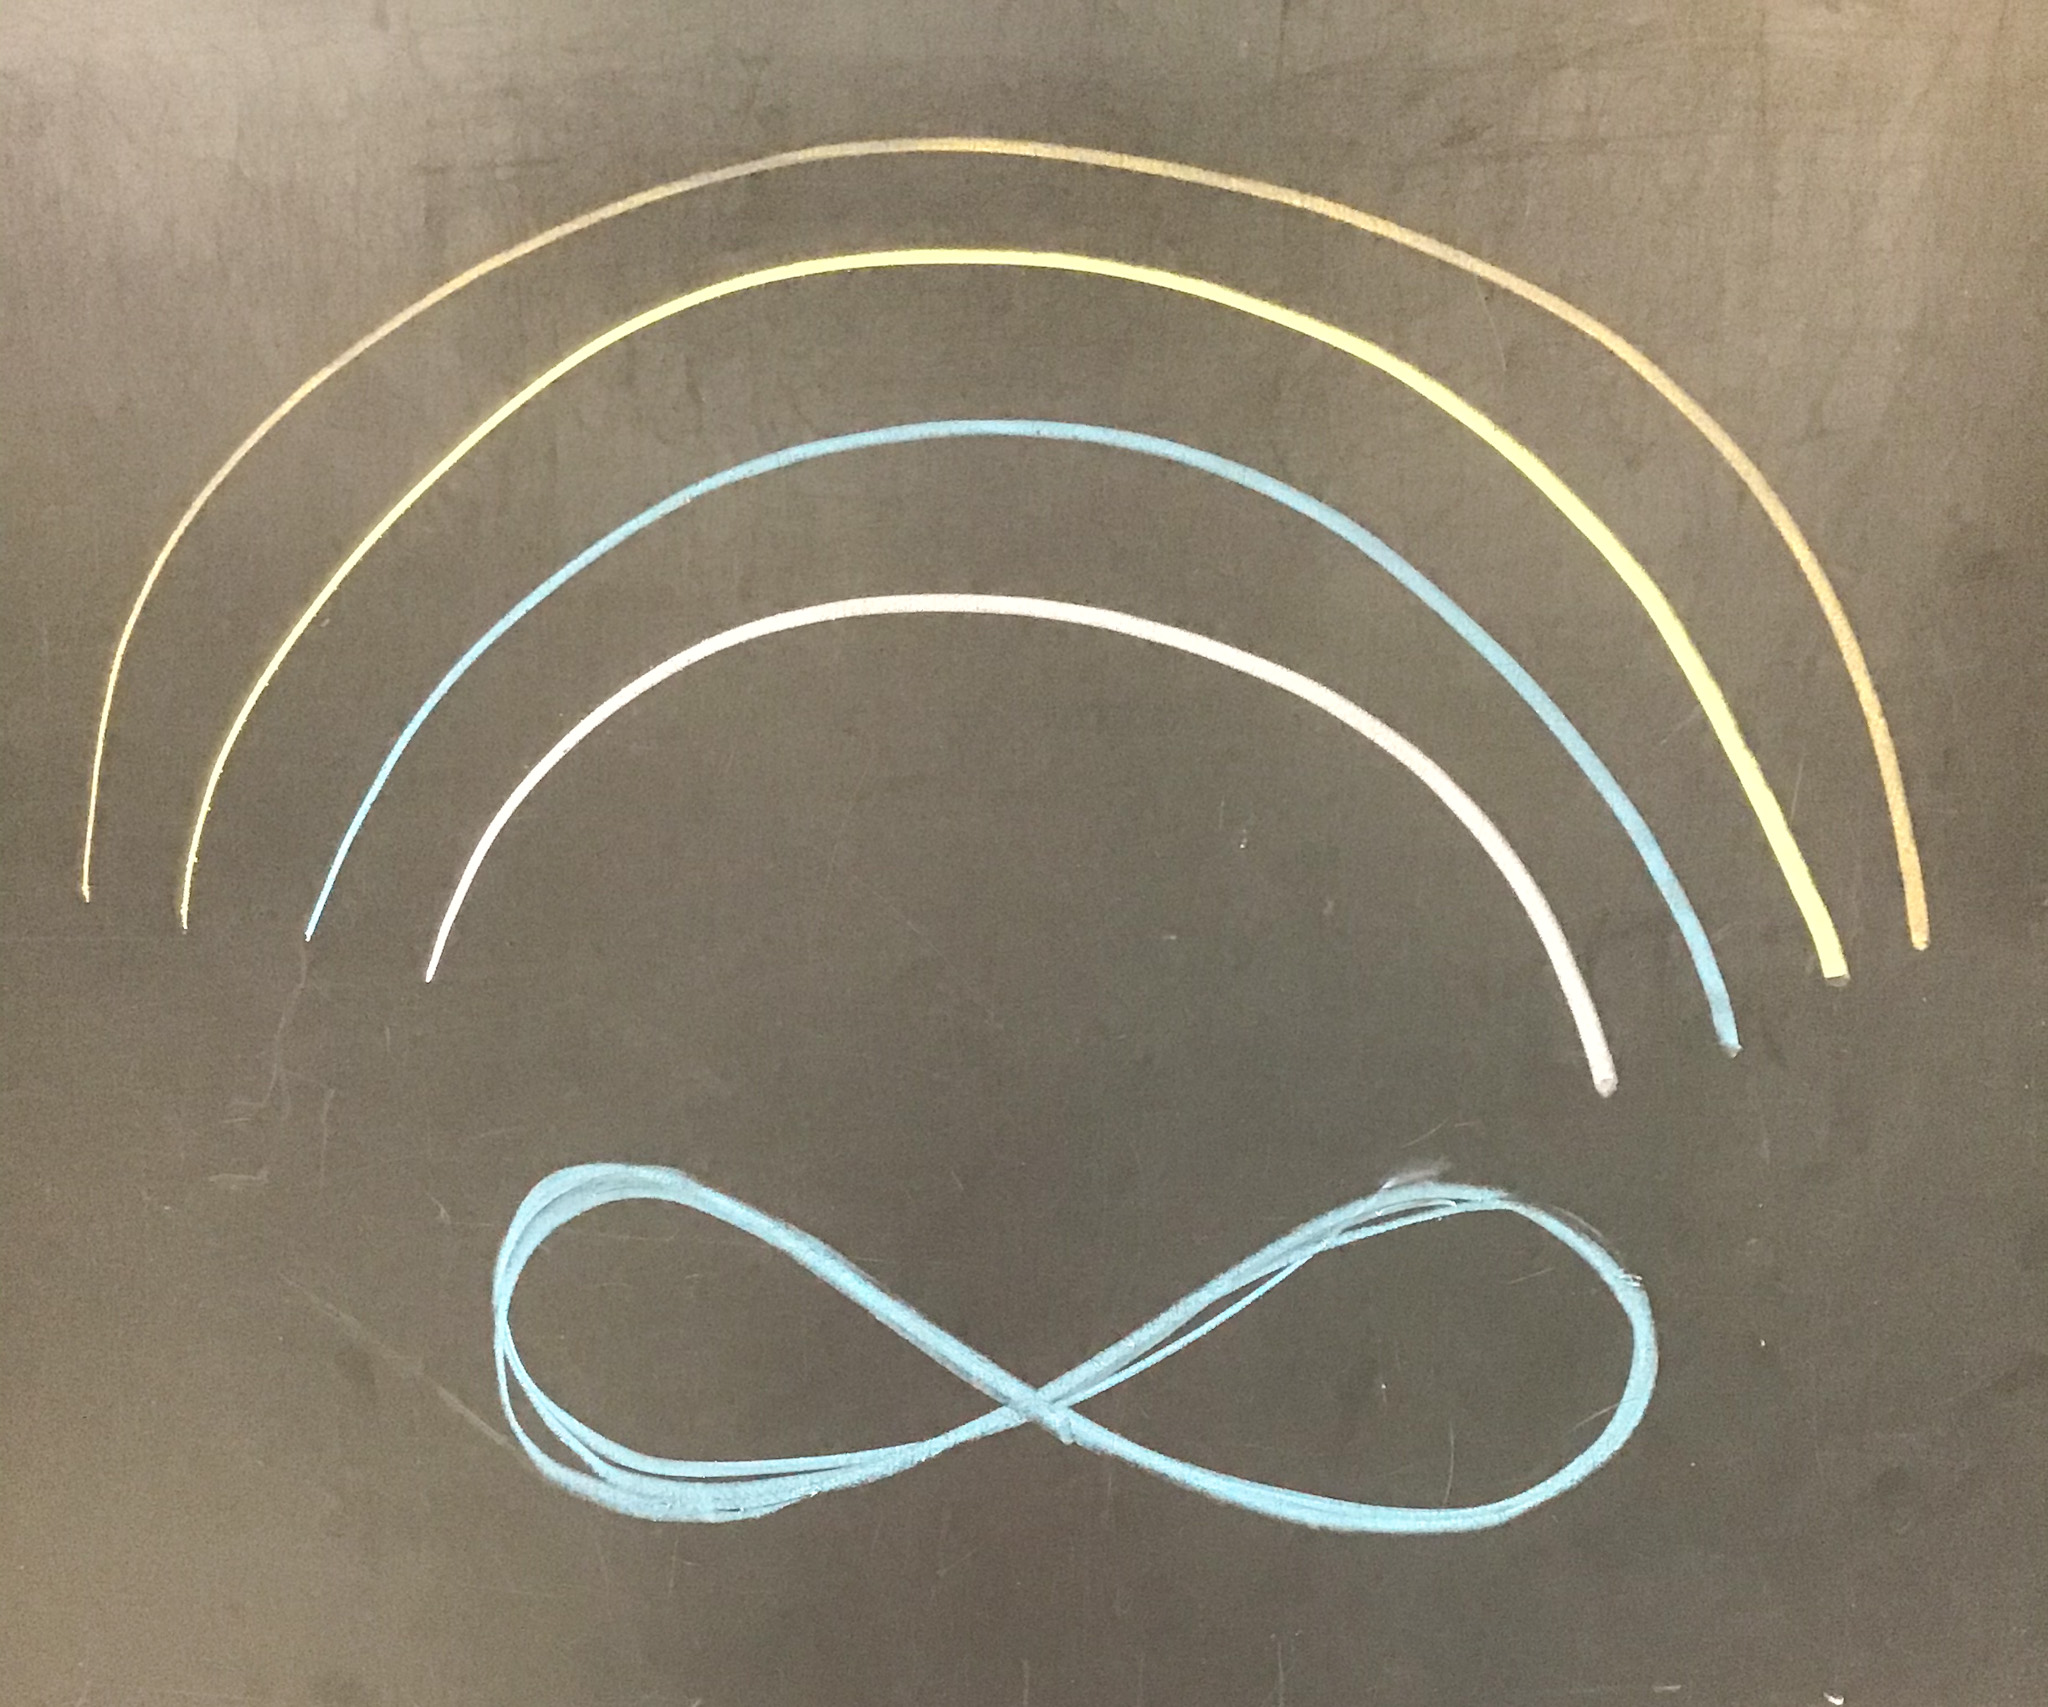 Rainbow arc shape and horizontal figure eight drawn on chalkboard